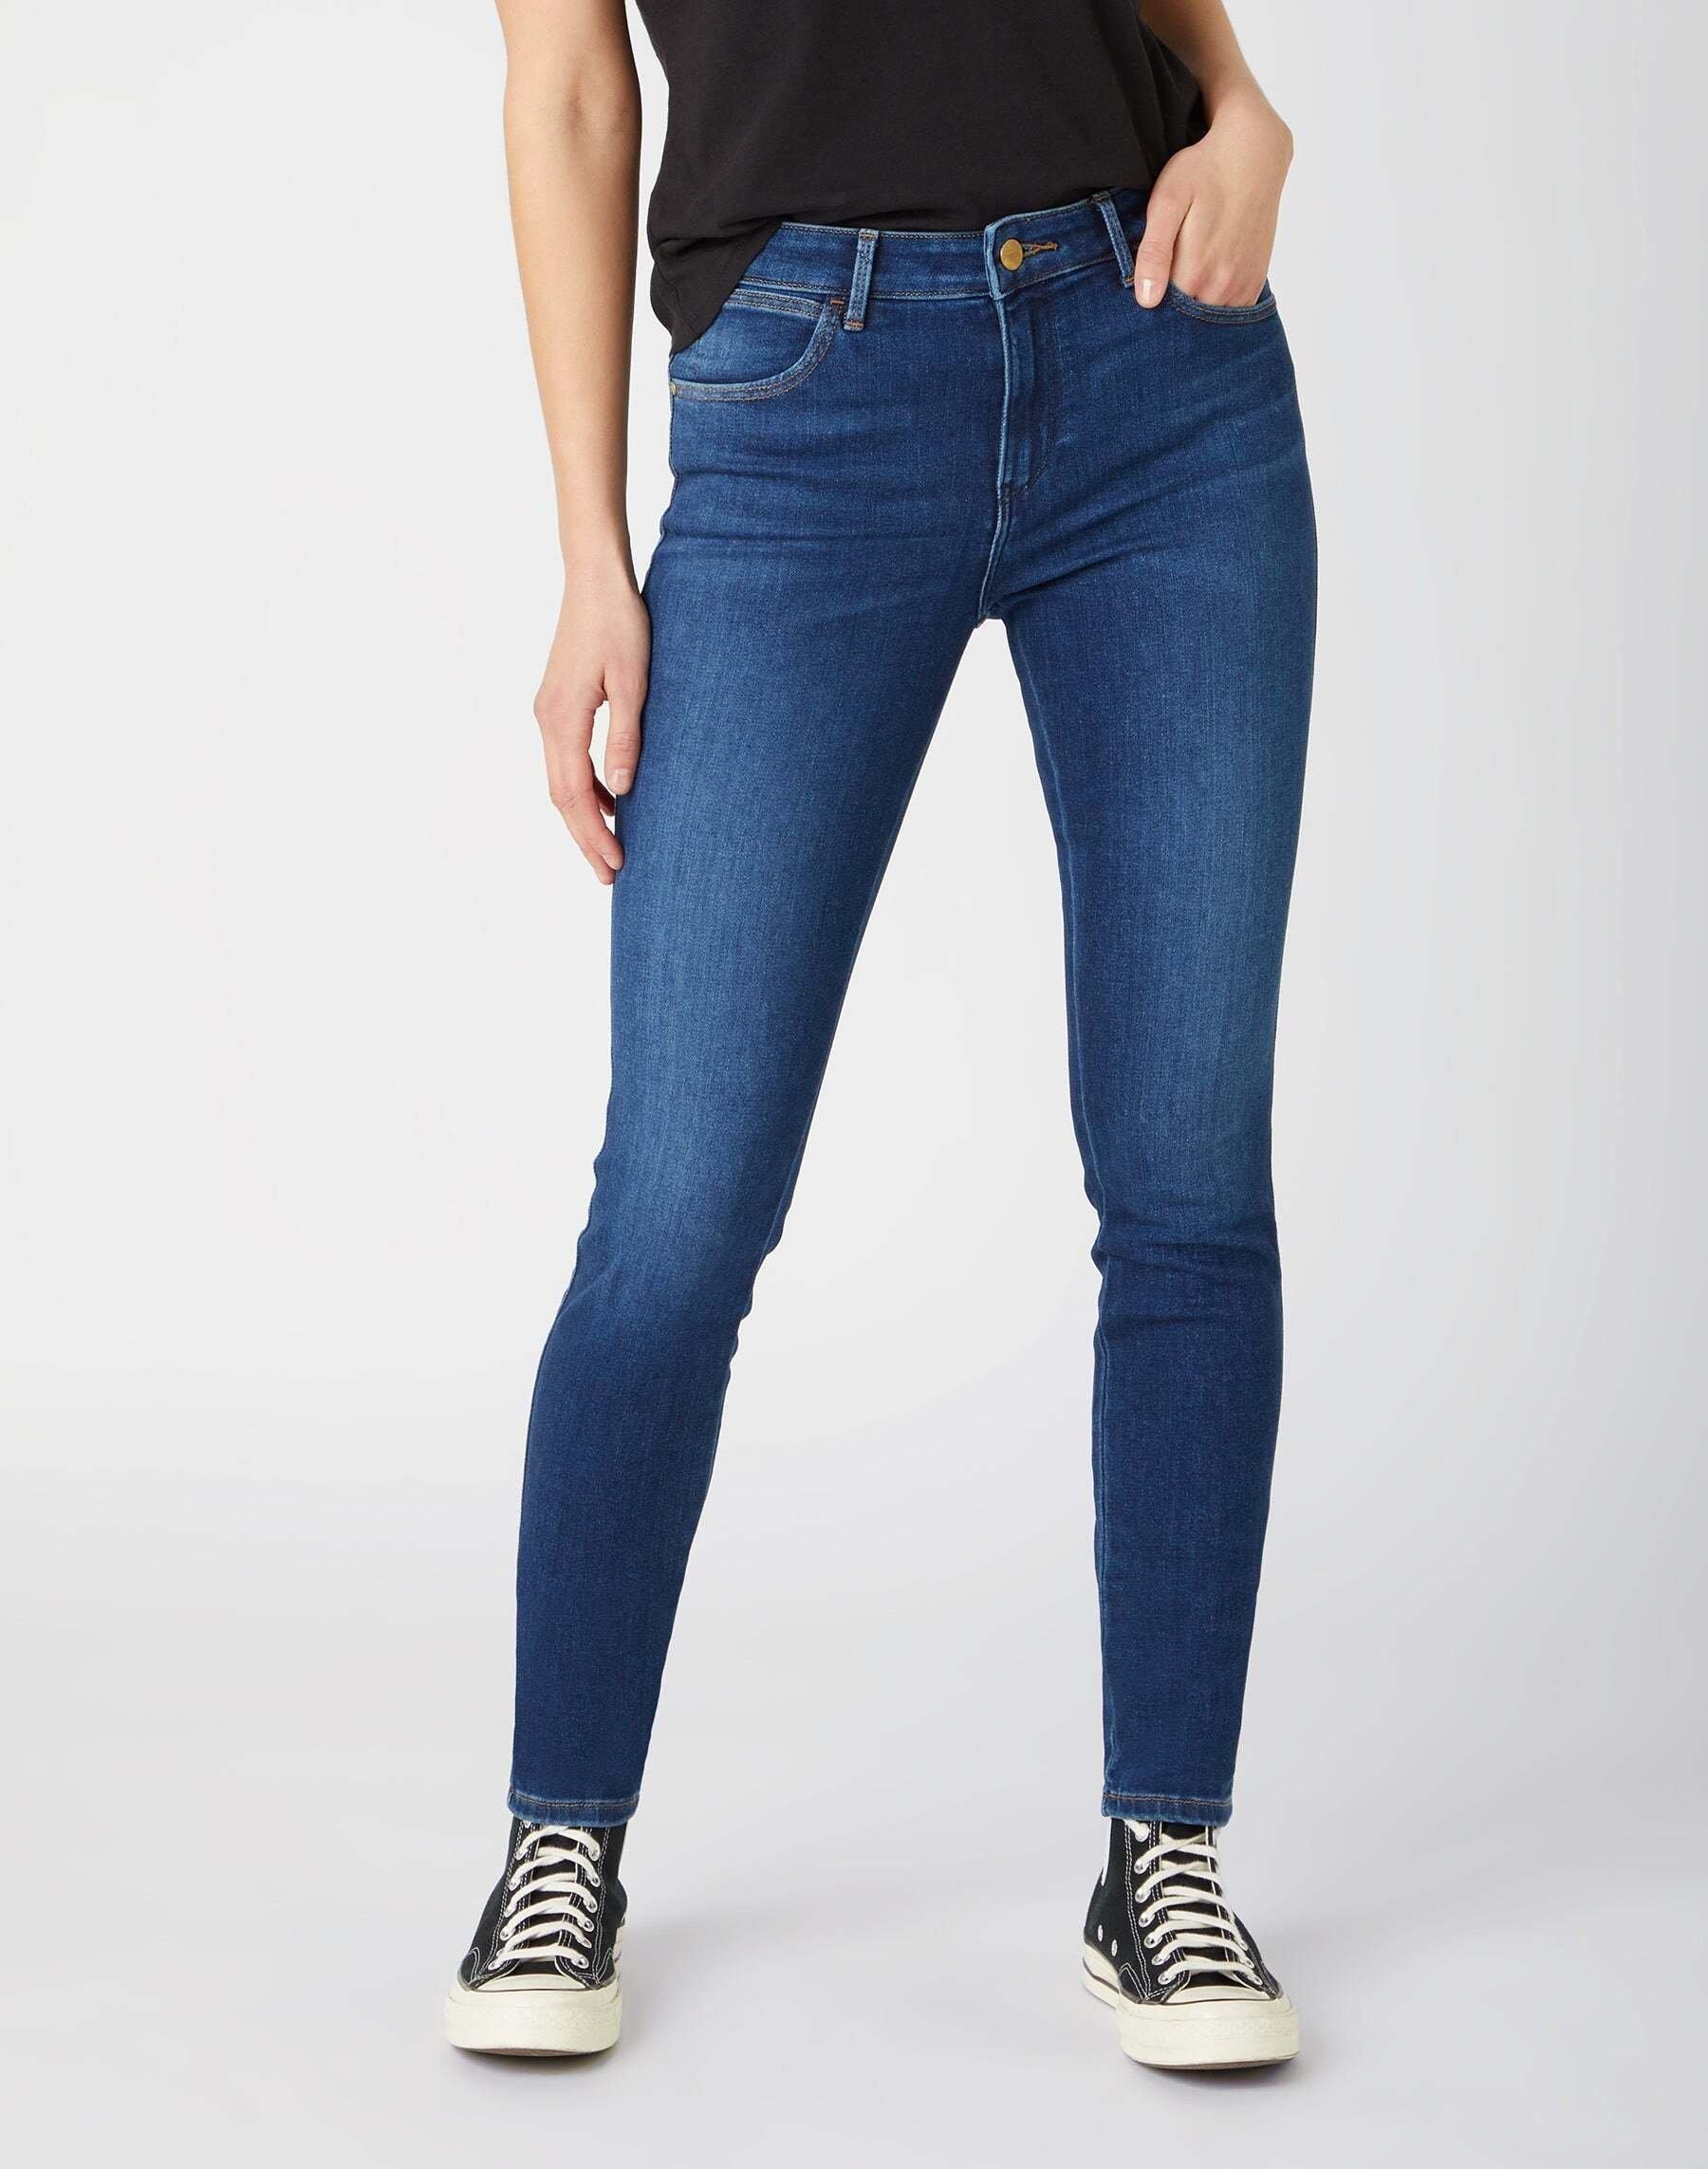 Jeans Skinny Fit Skinny Damen Blau Denim L32/W25 von Wrangler